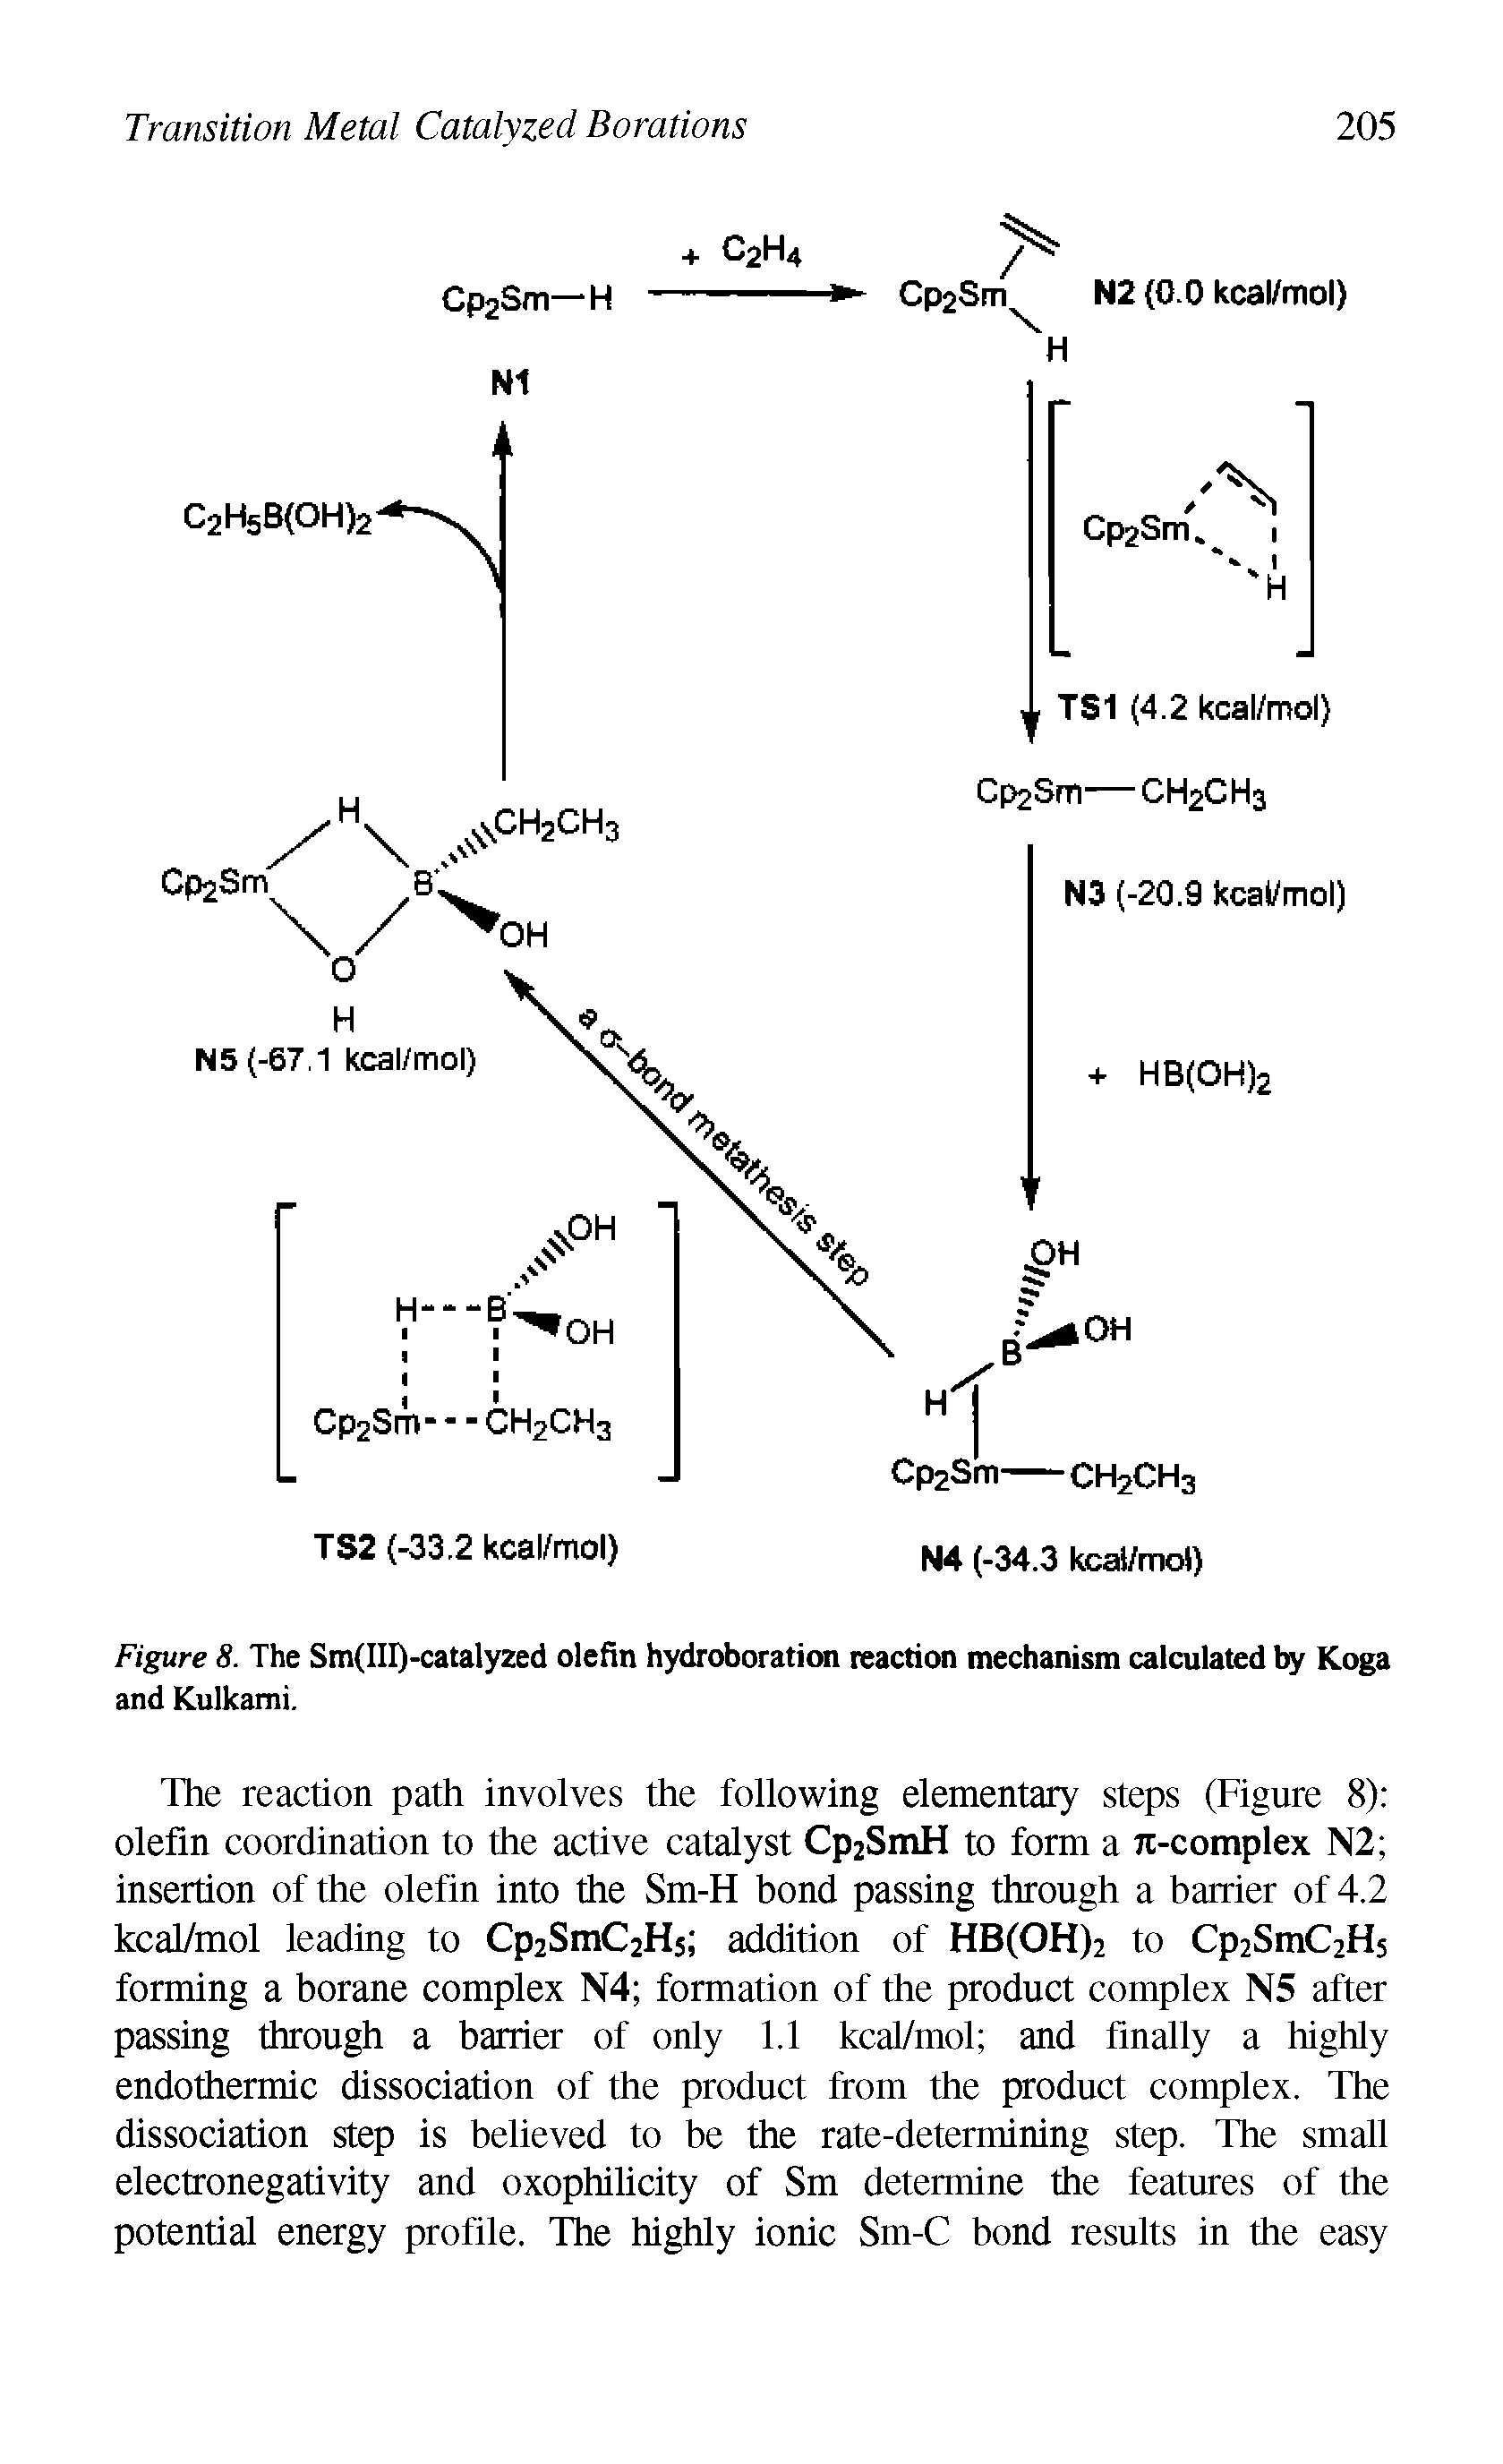 Figure 8. The Sm(III)-catalyzed olefin hydroboration reaction mechanism calculated by Koga and Kulkami.